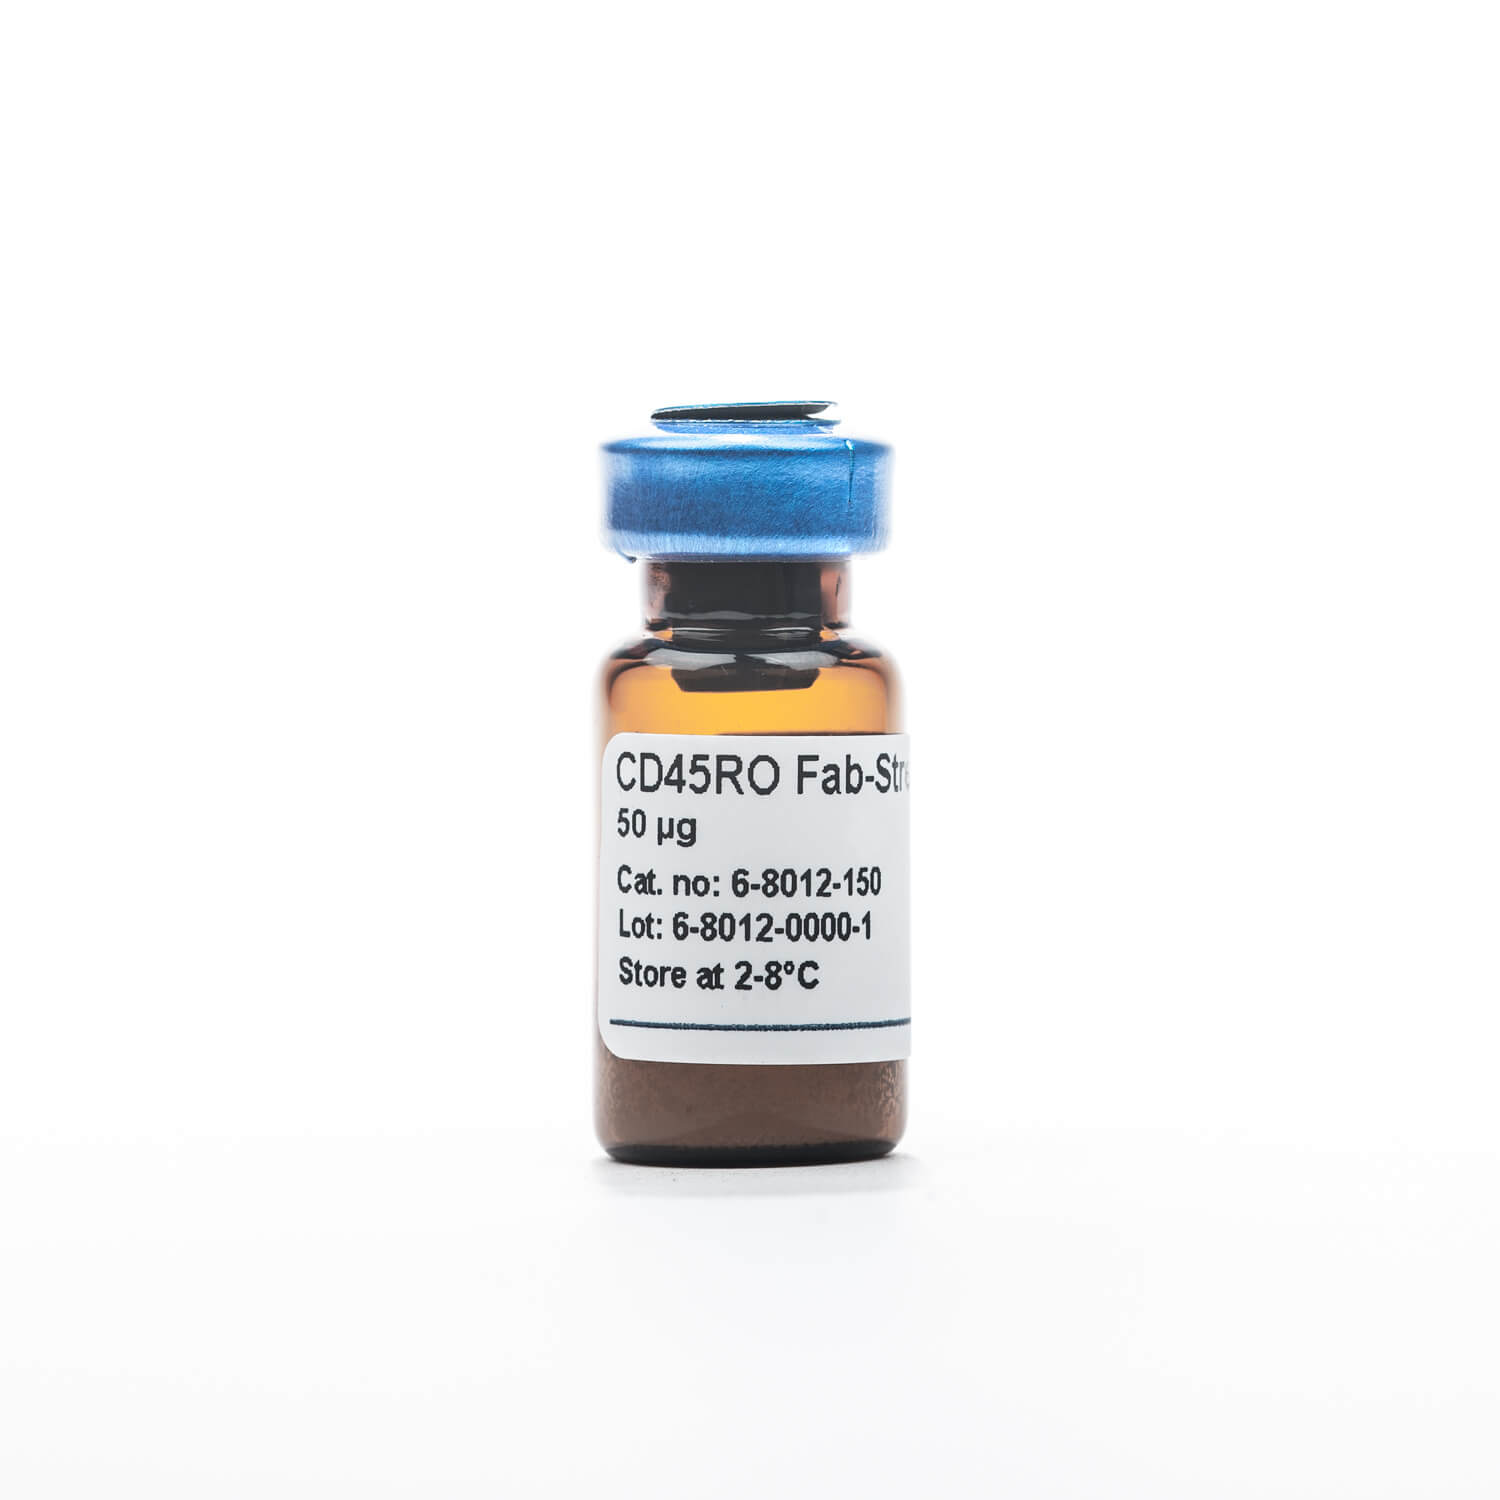 CD45RO Fab-Strep, human